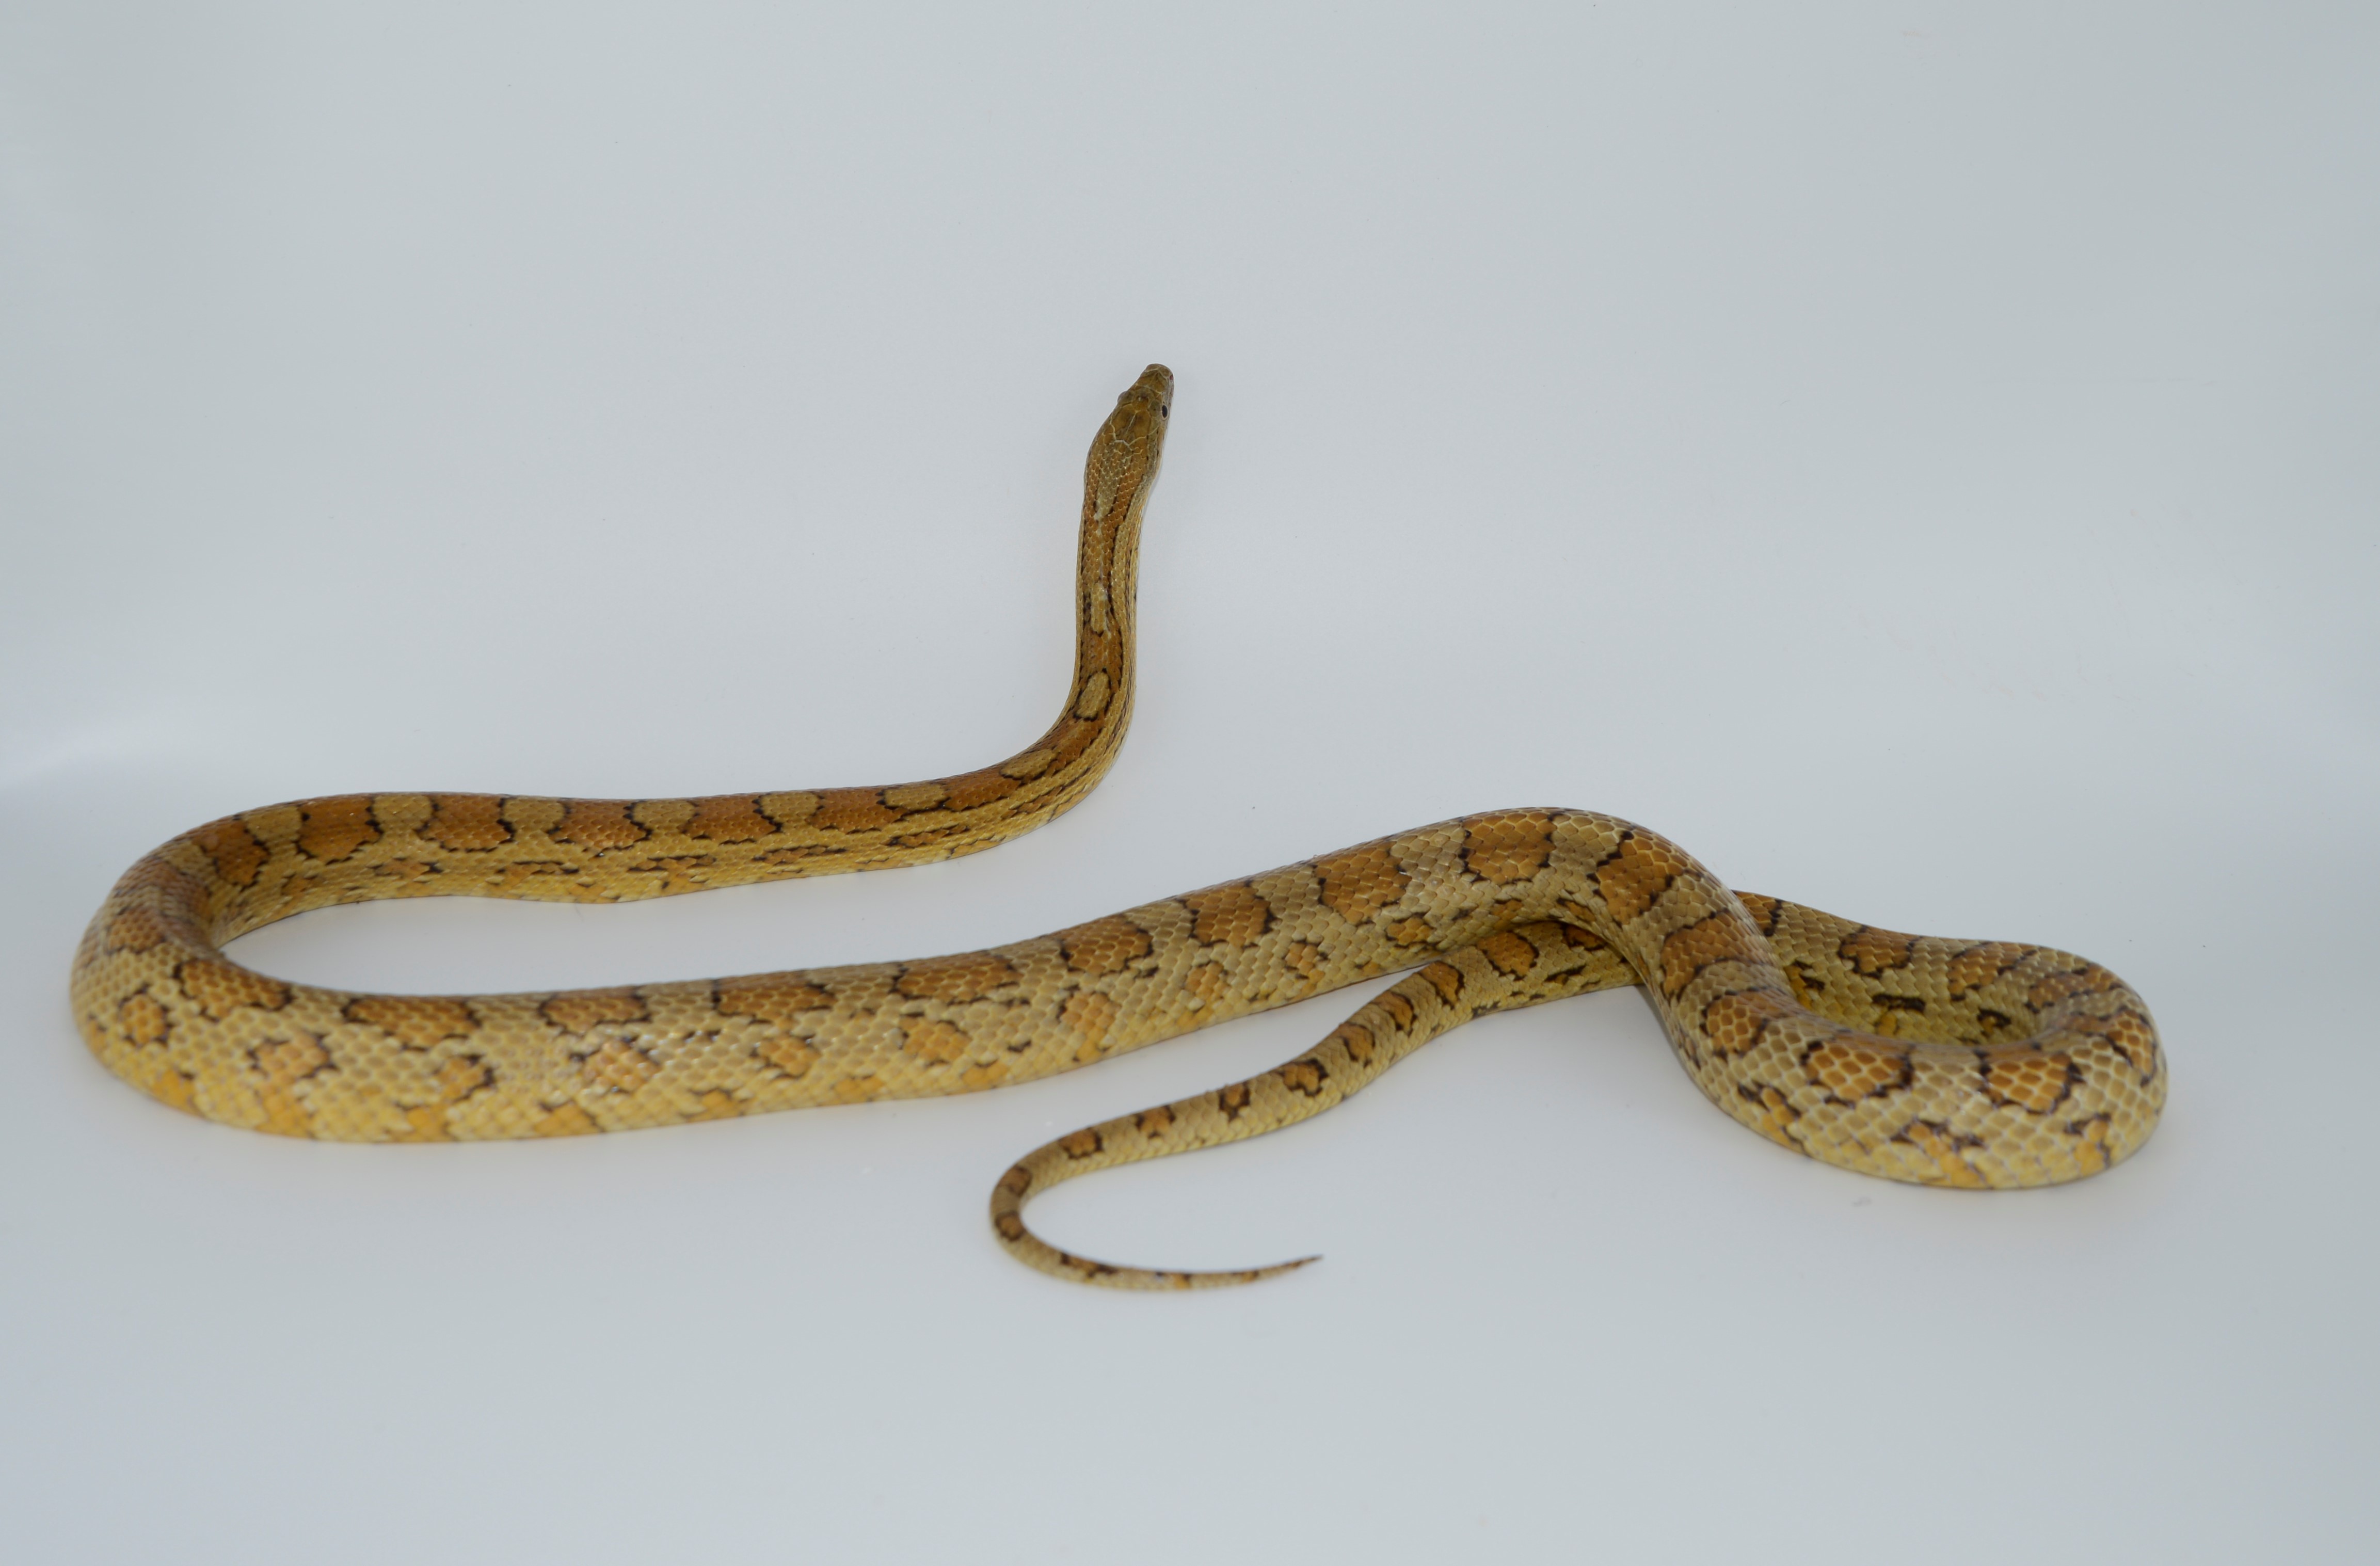 Caramel Corn Snake by Lancelots Royal Reptiles